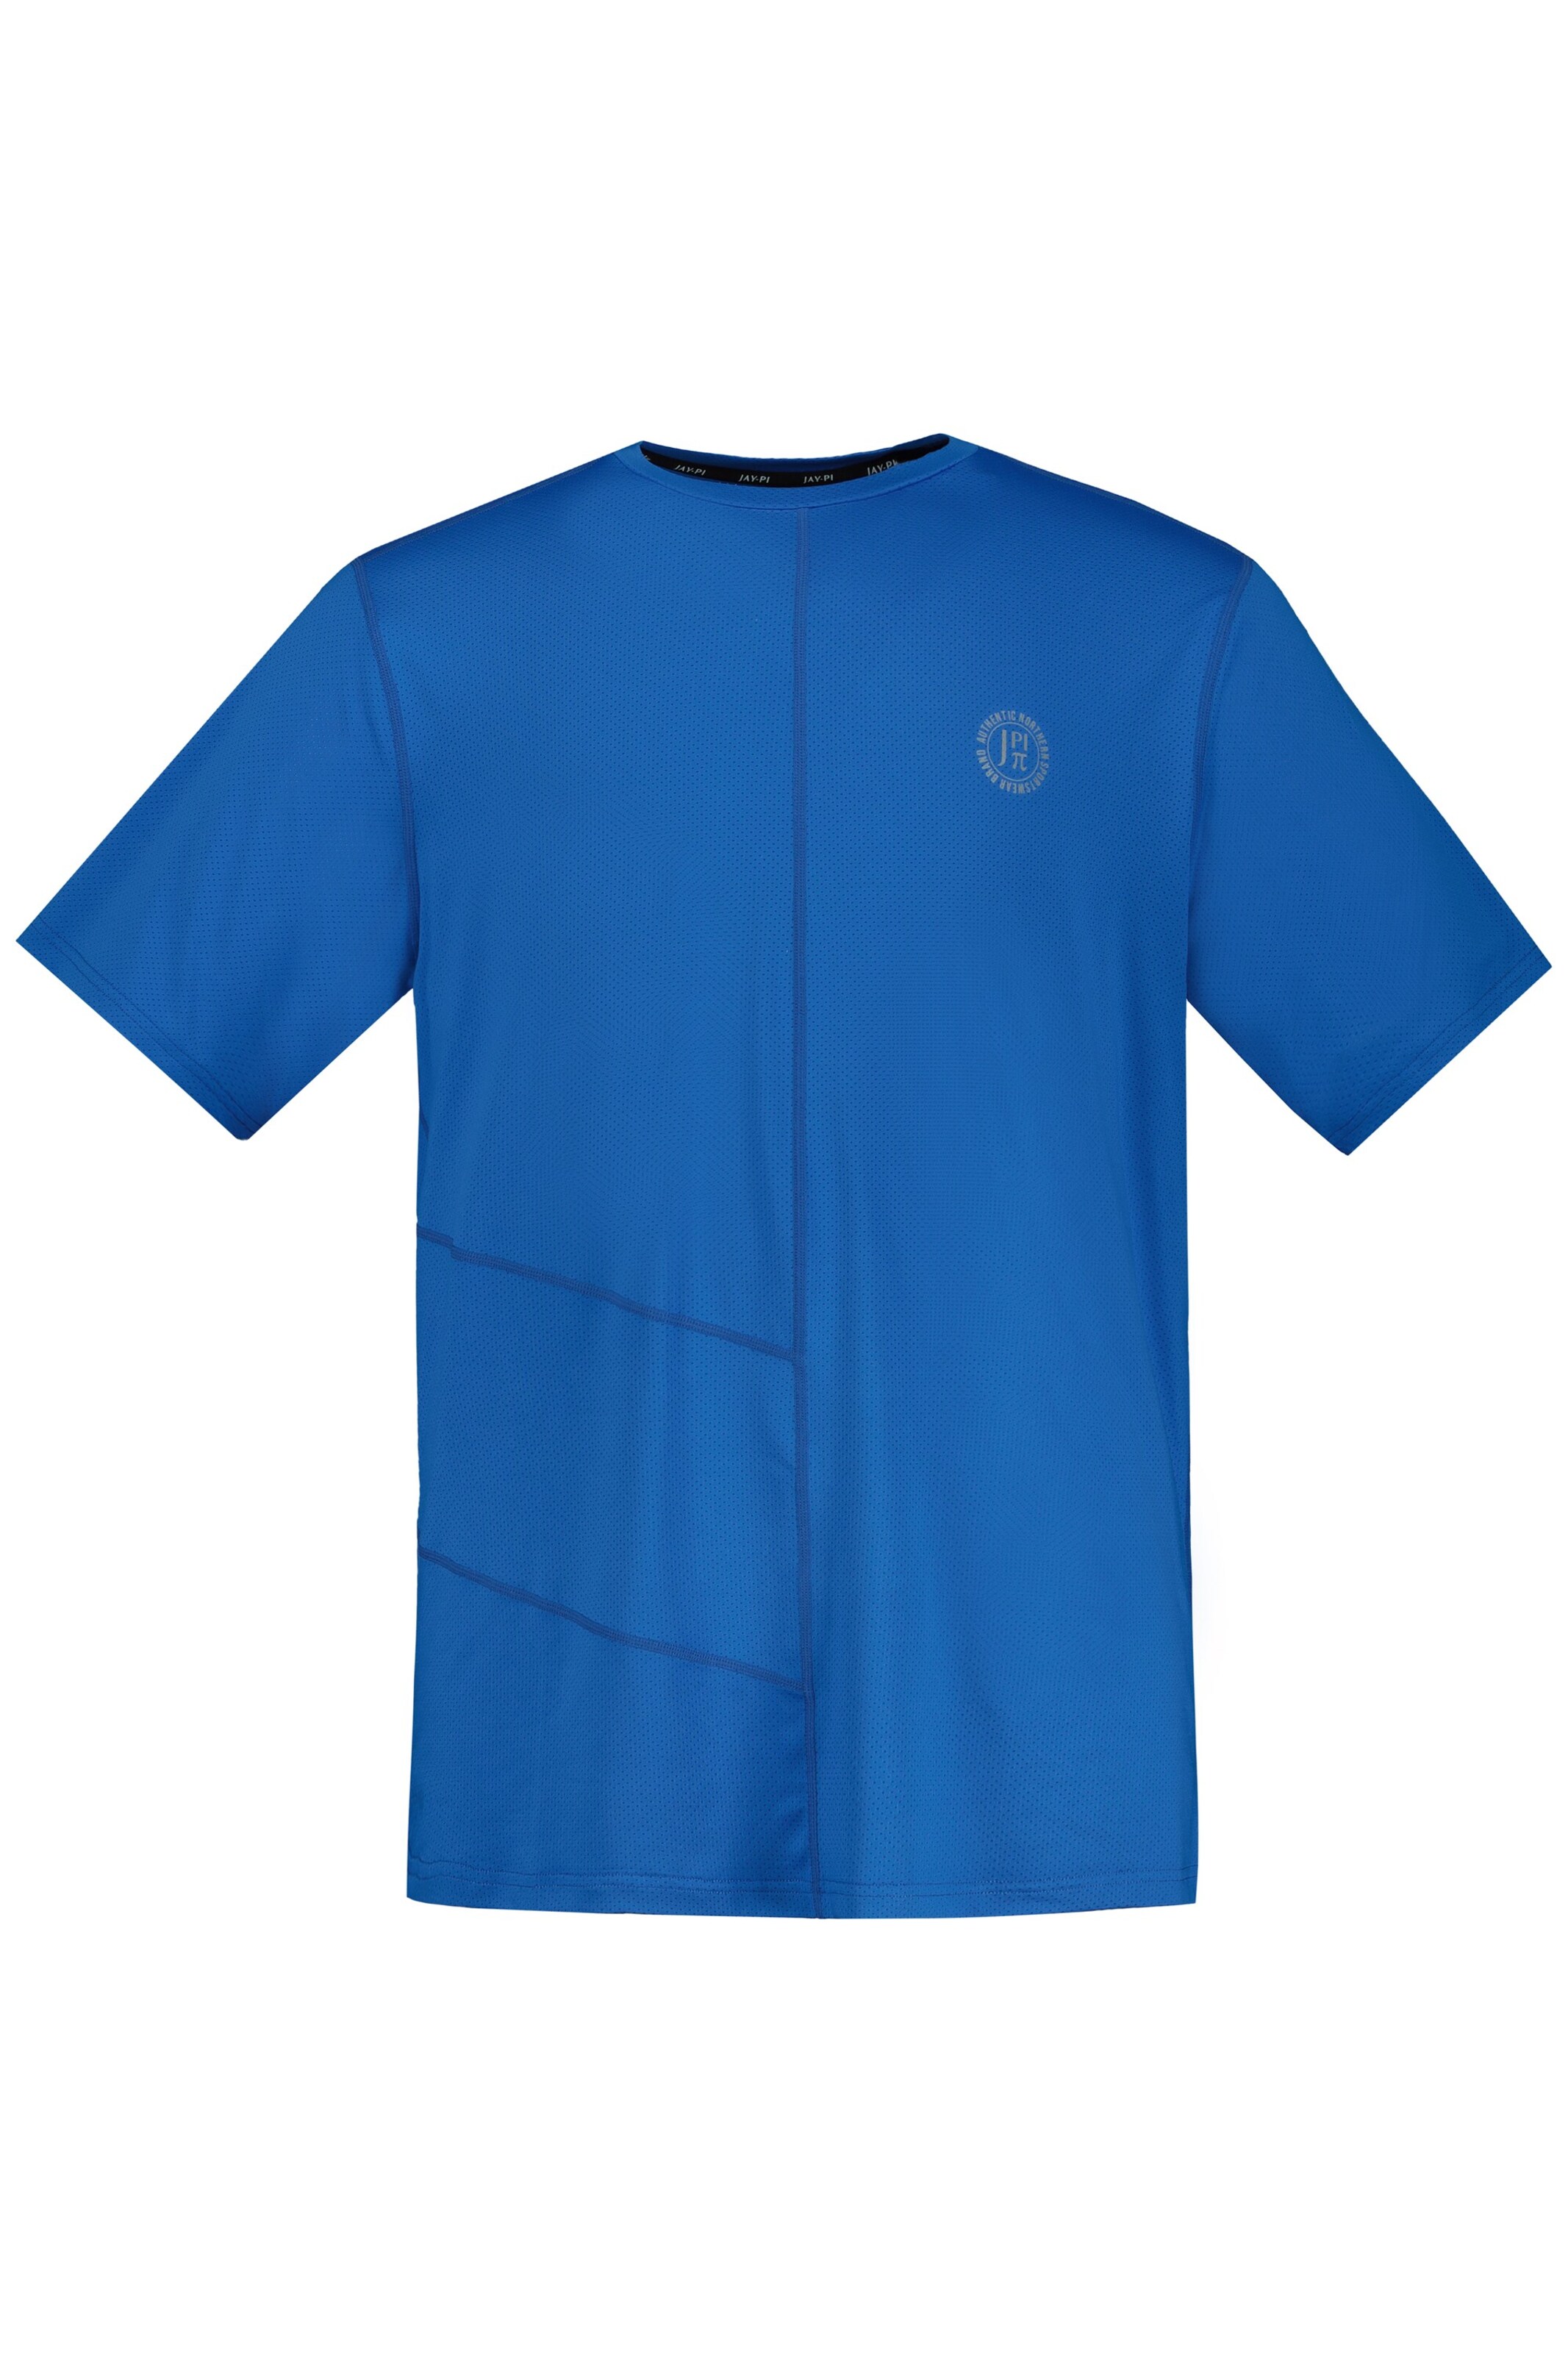 Männer Große Größen JP1880 Shirt in Blau - WN45144